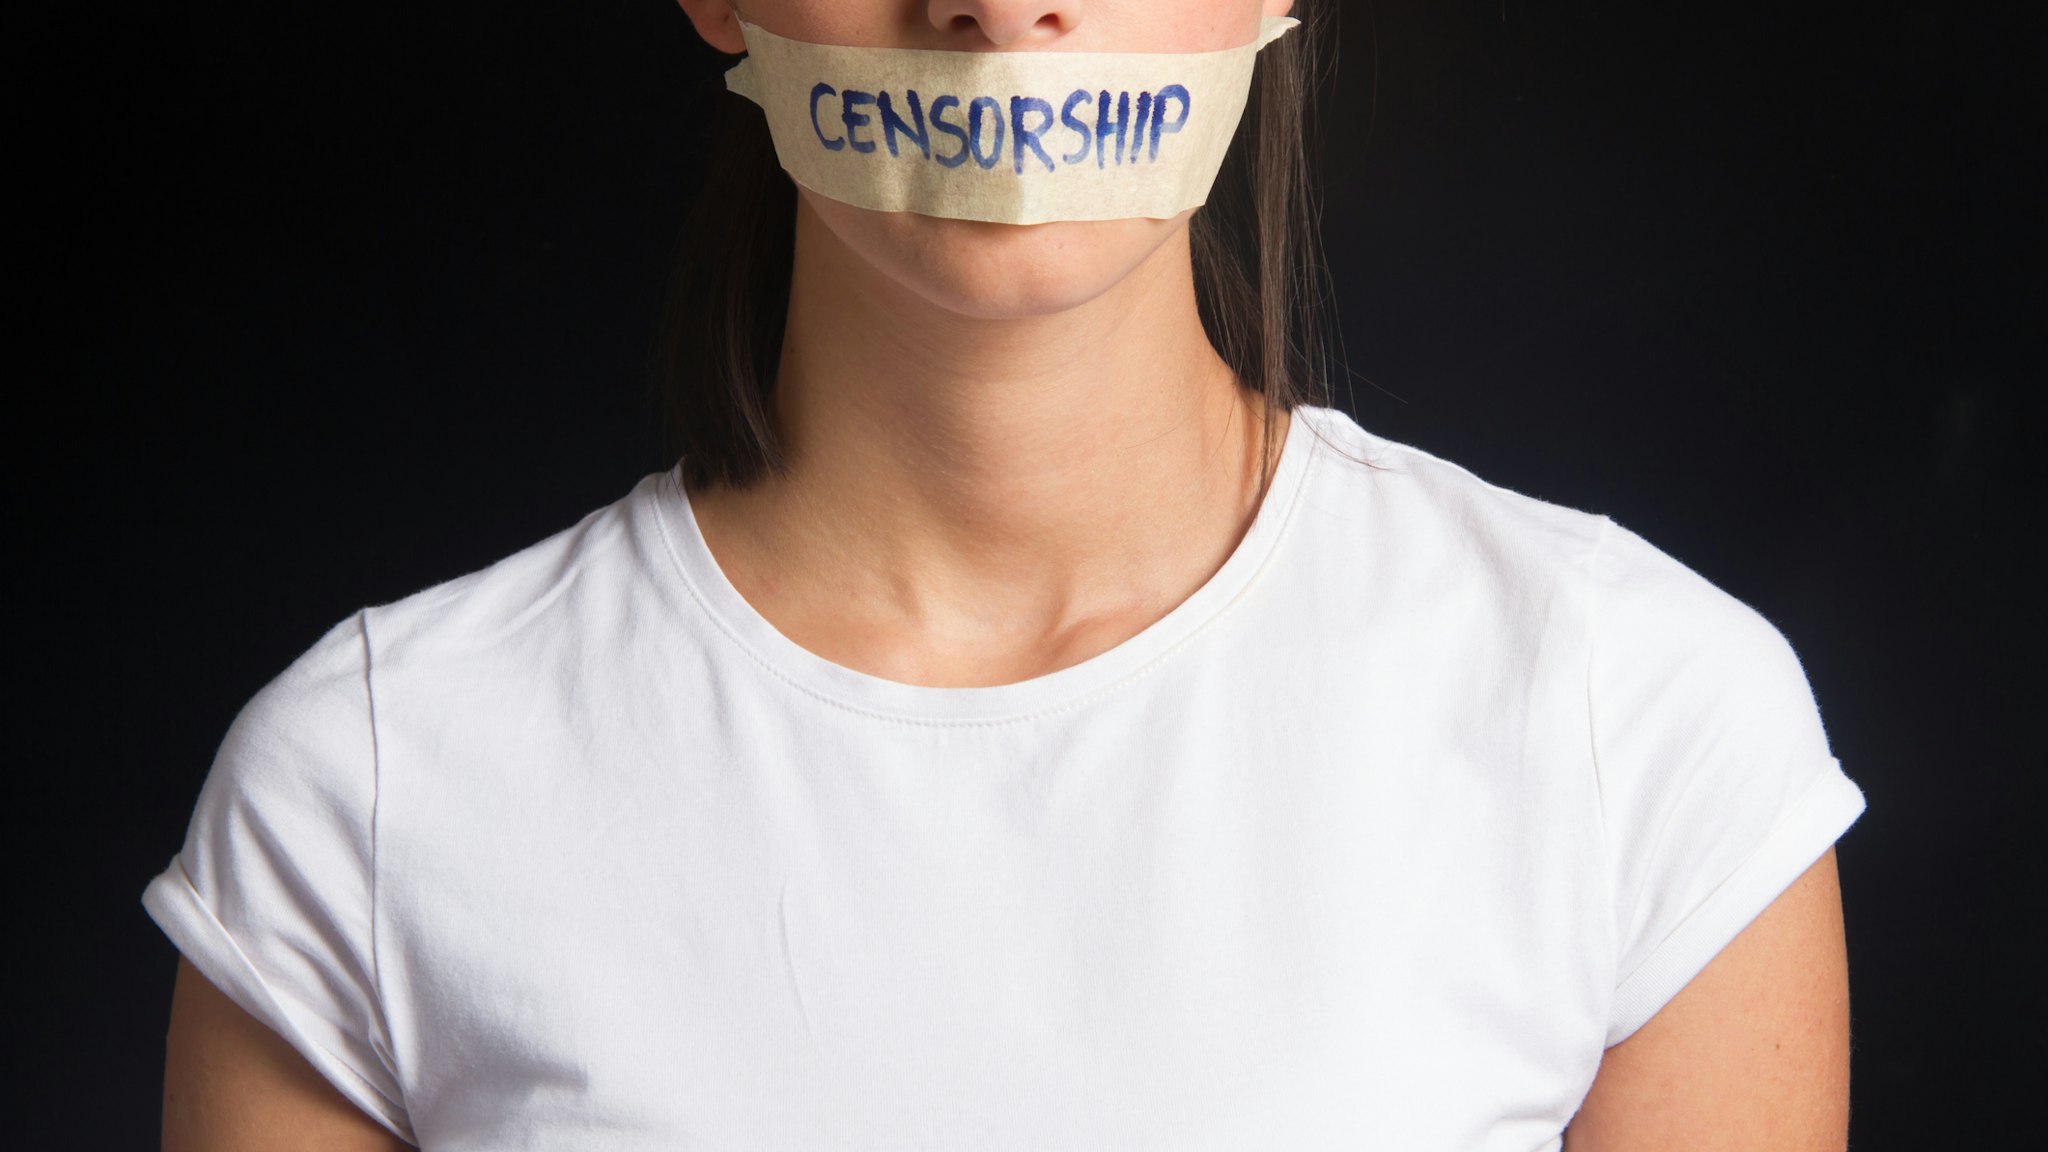 Censorship Concept